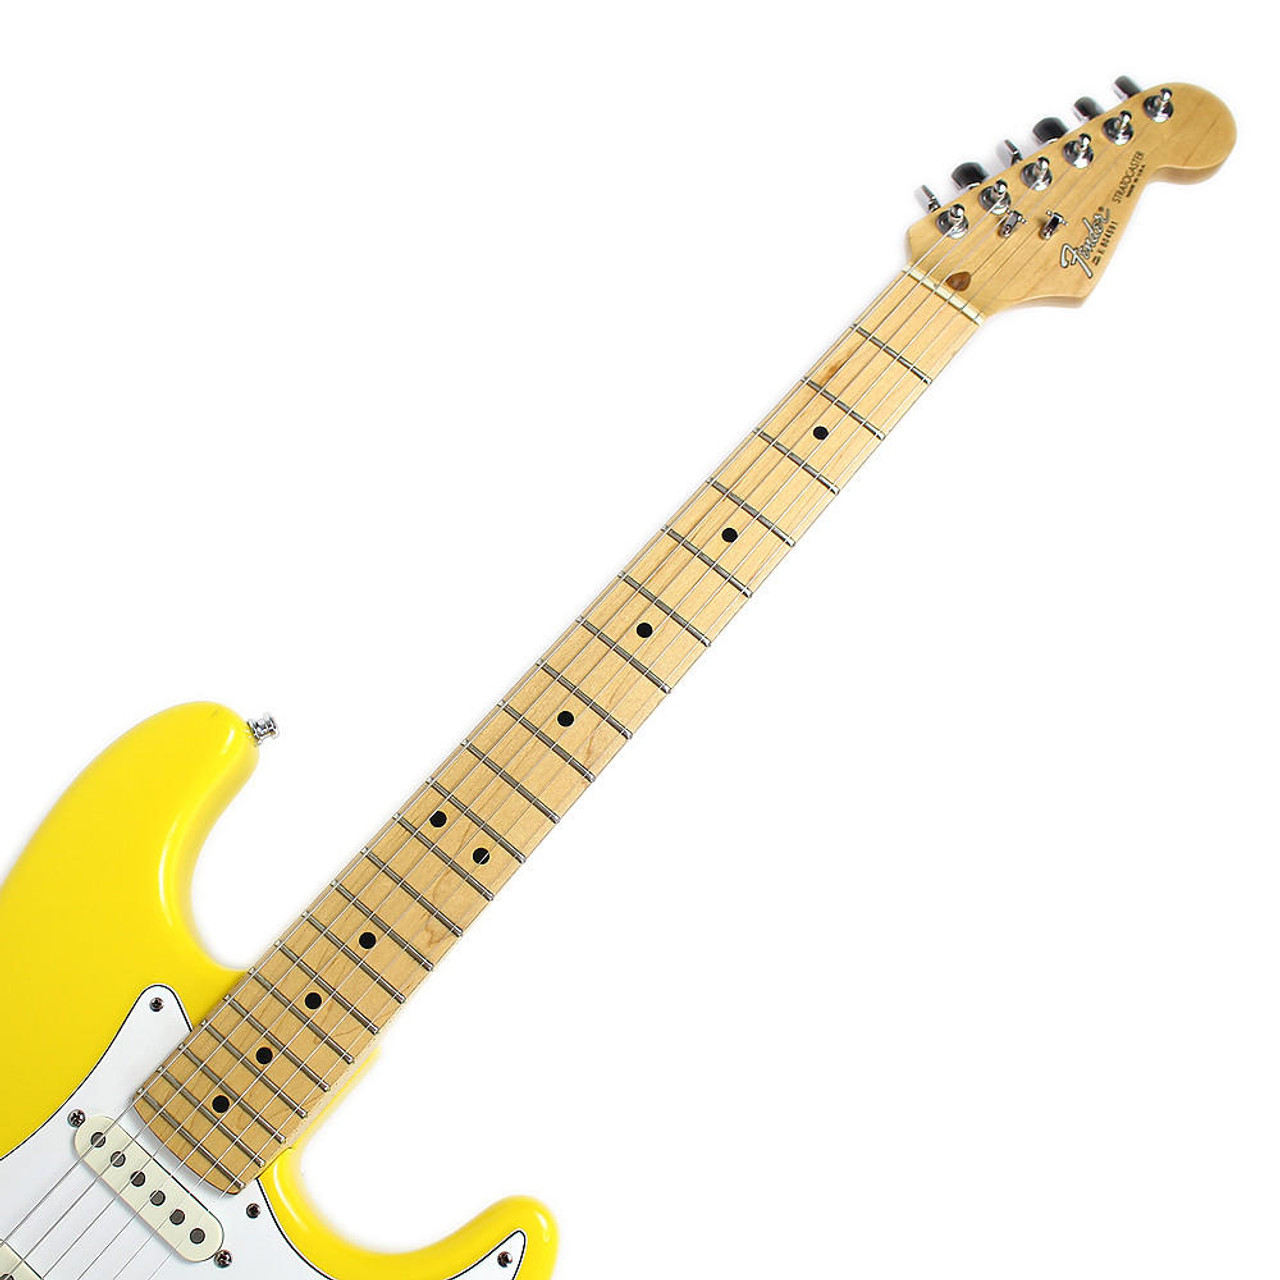 1989 Fender American Standard Stratocaster Electric Guitar Graffiti Yellow